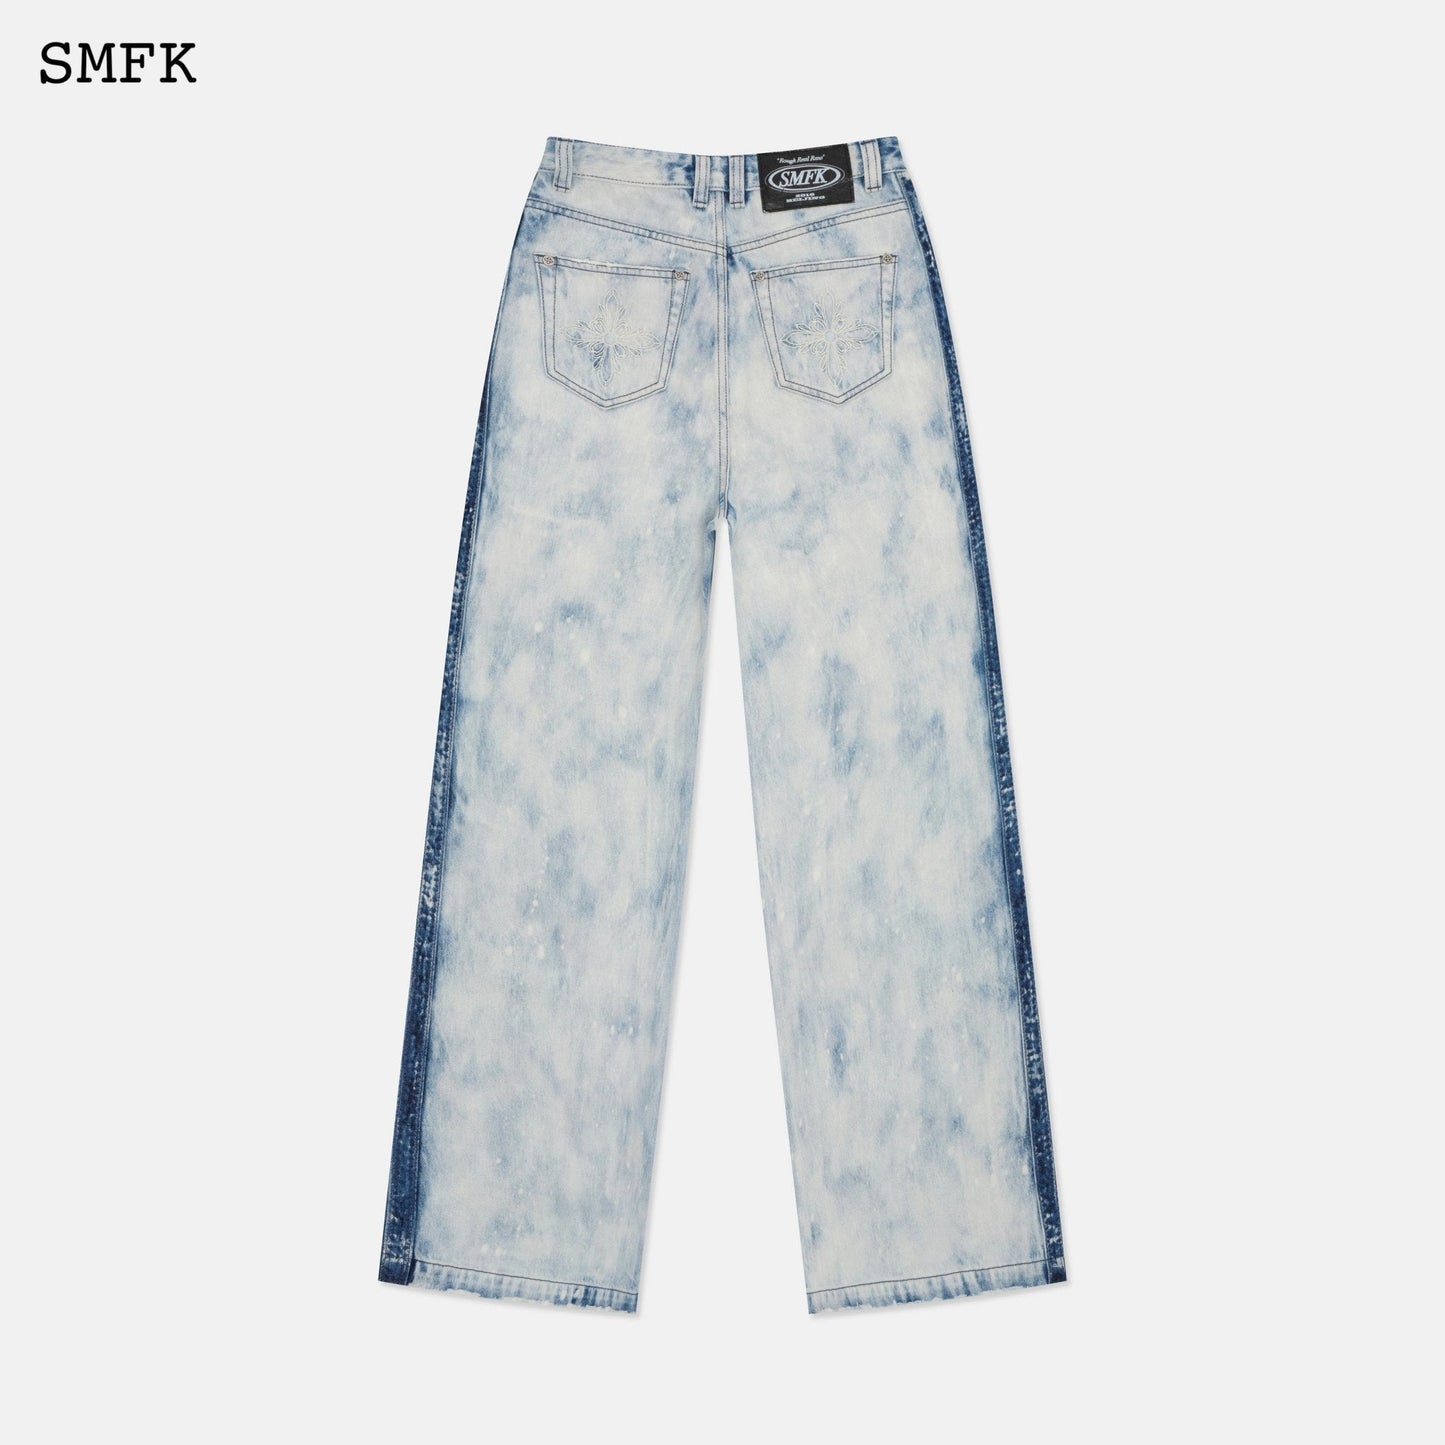 SMFK Wilderness Camouflage Blue Jeans